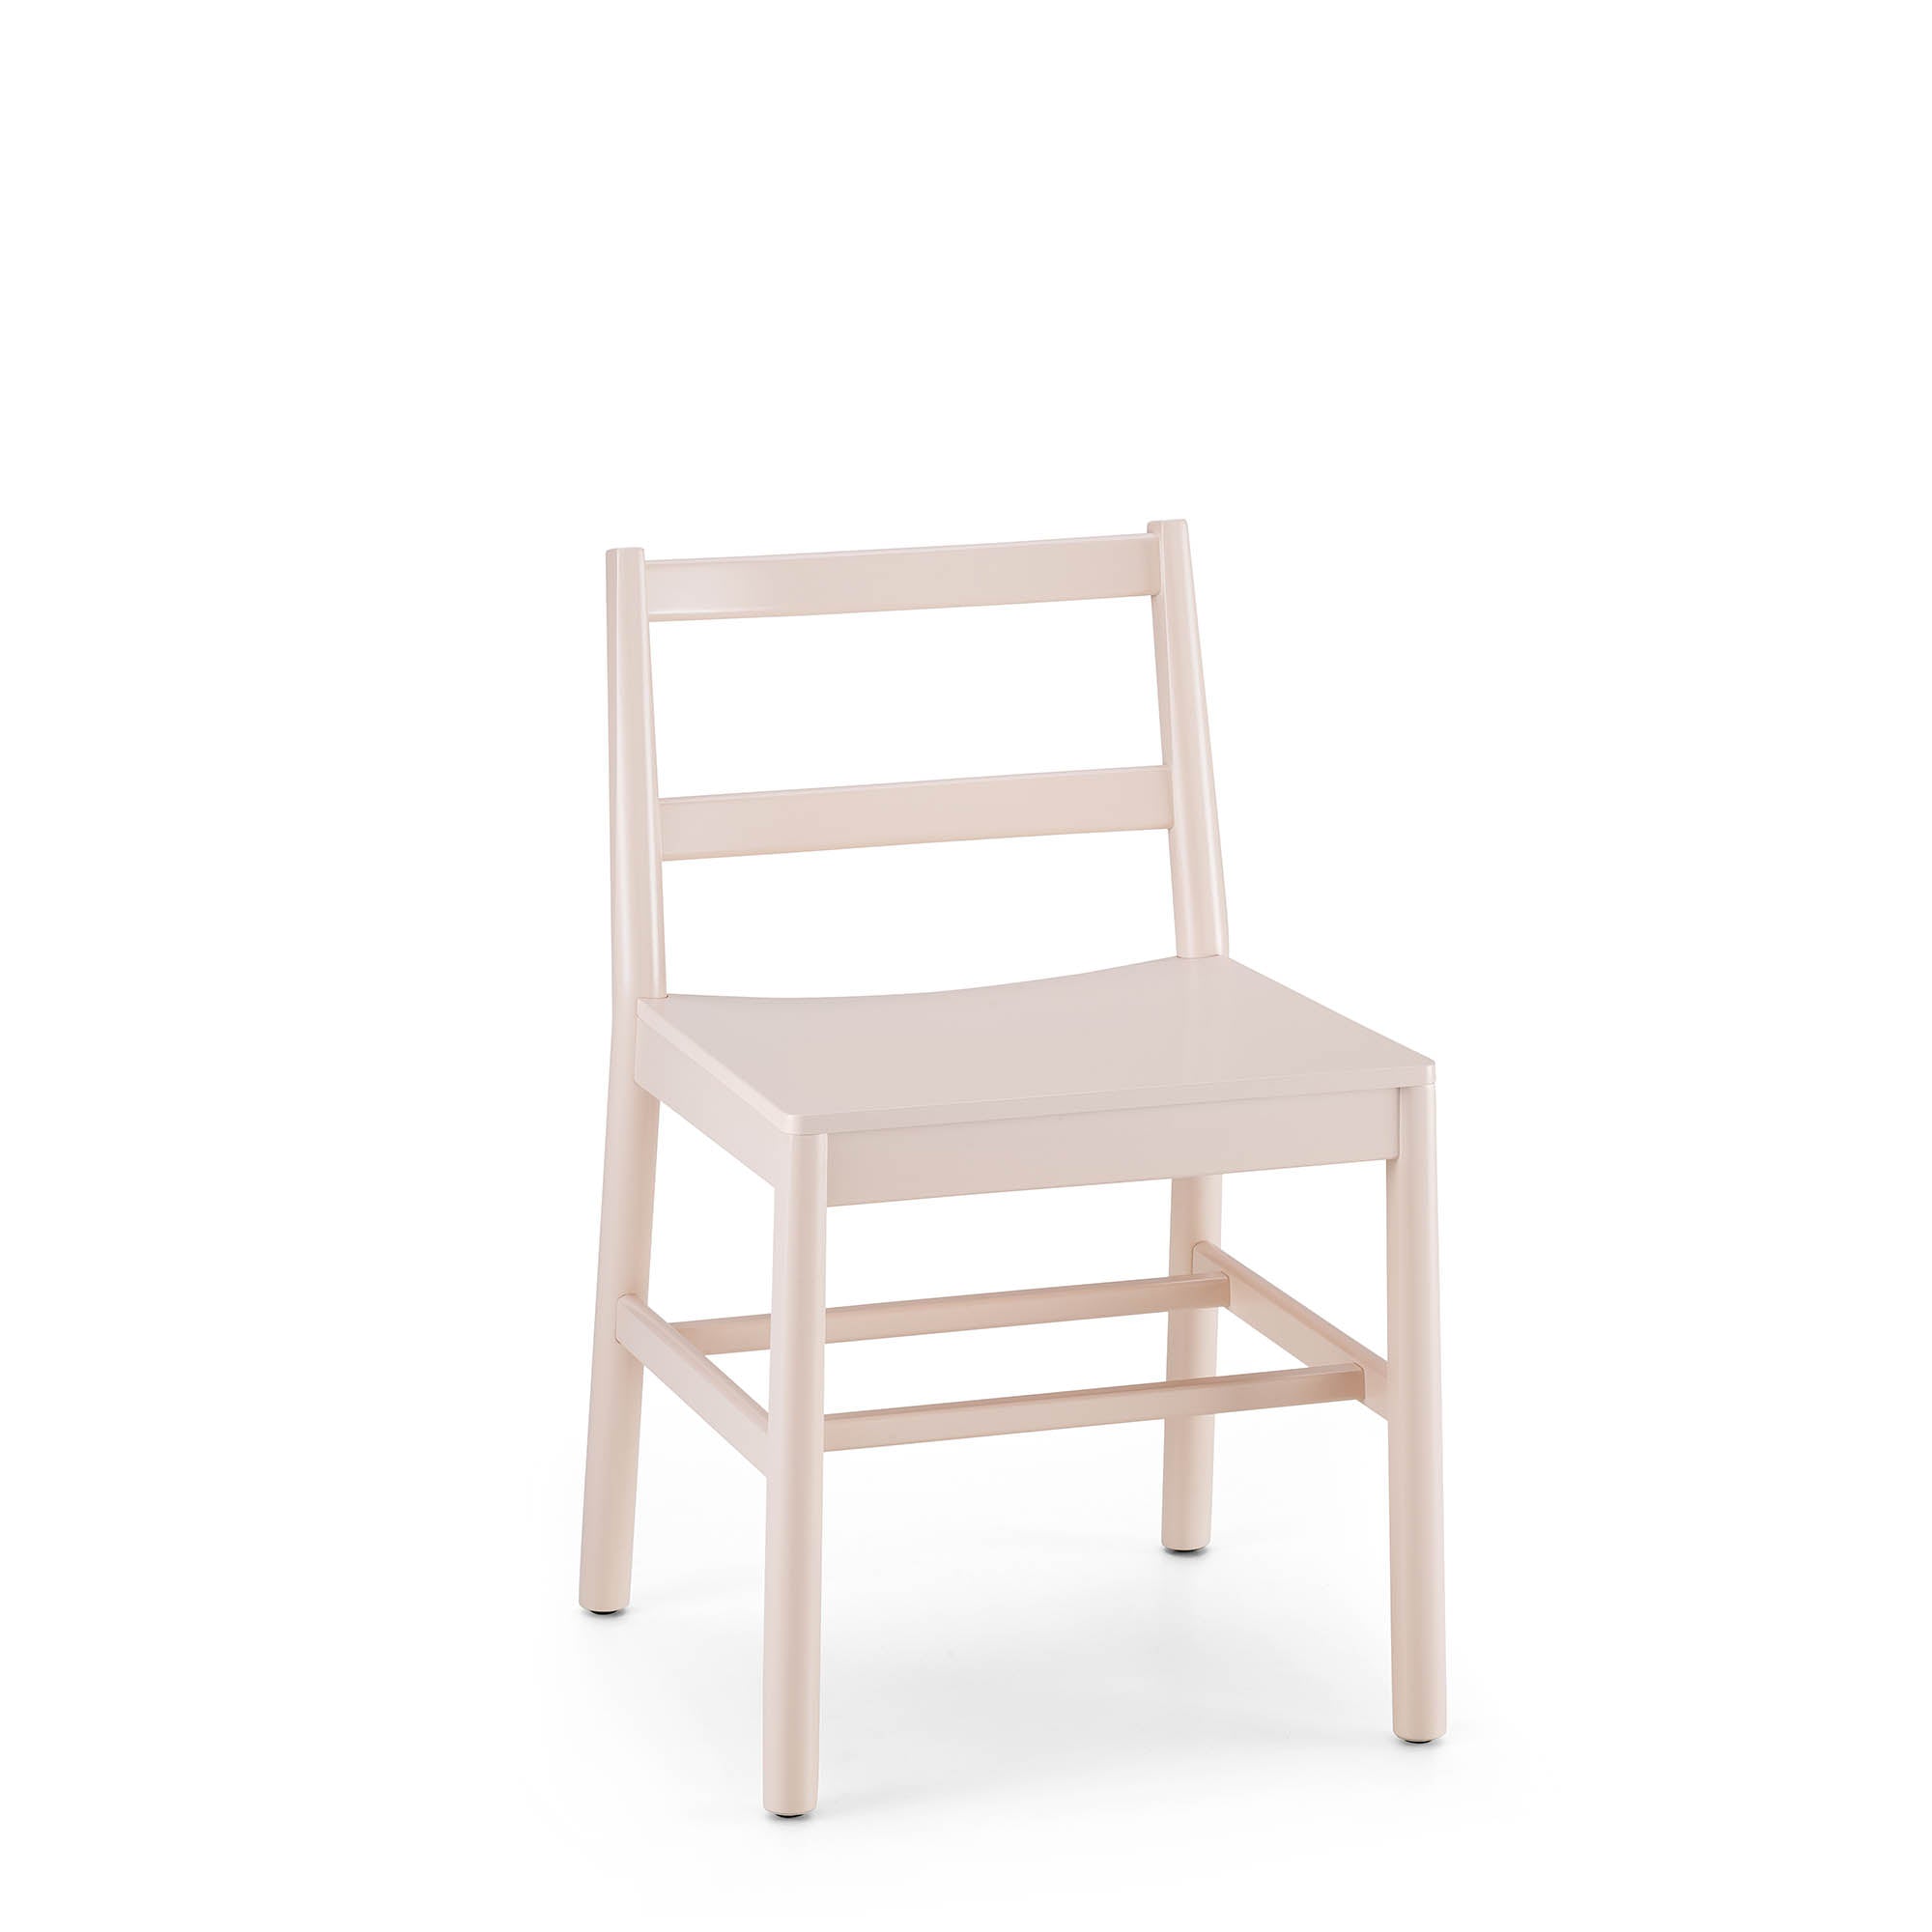 JULIE LE Chair beech wood frame natural colour